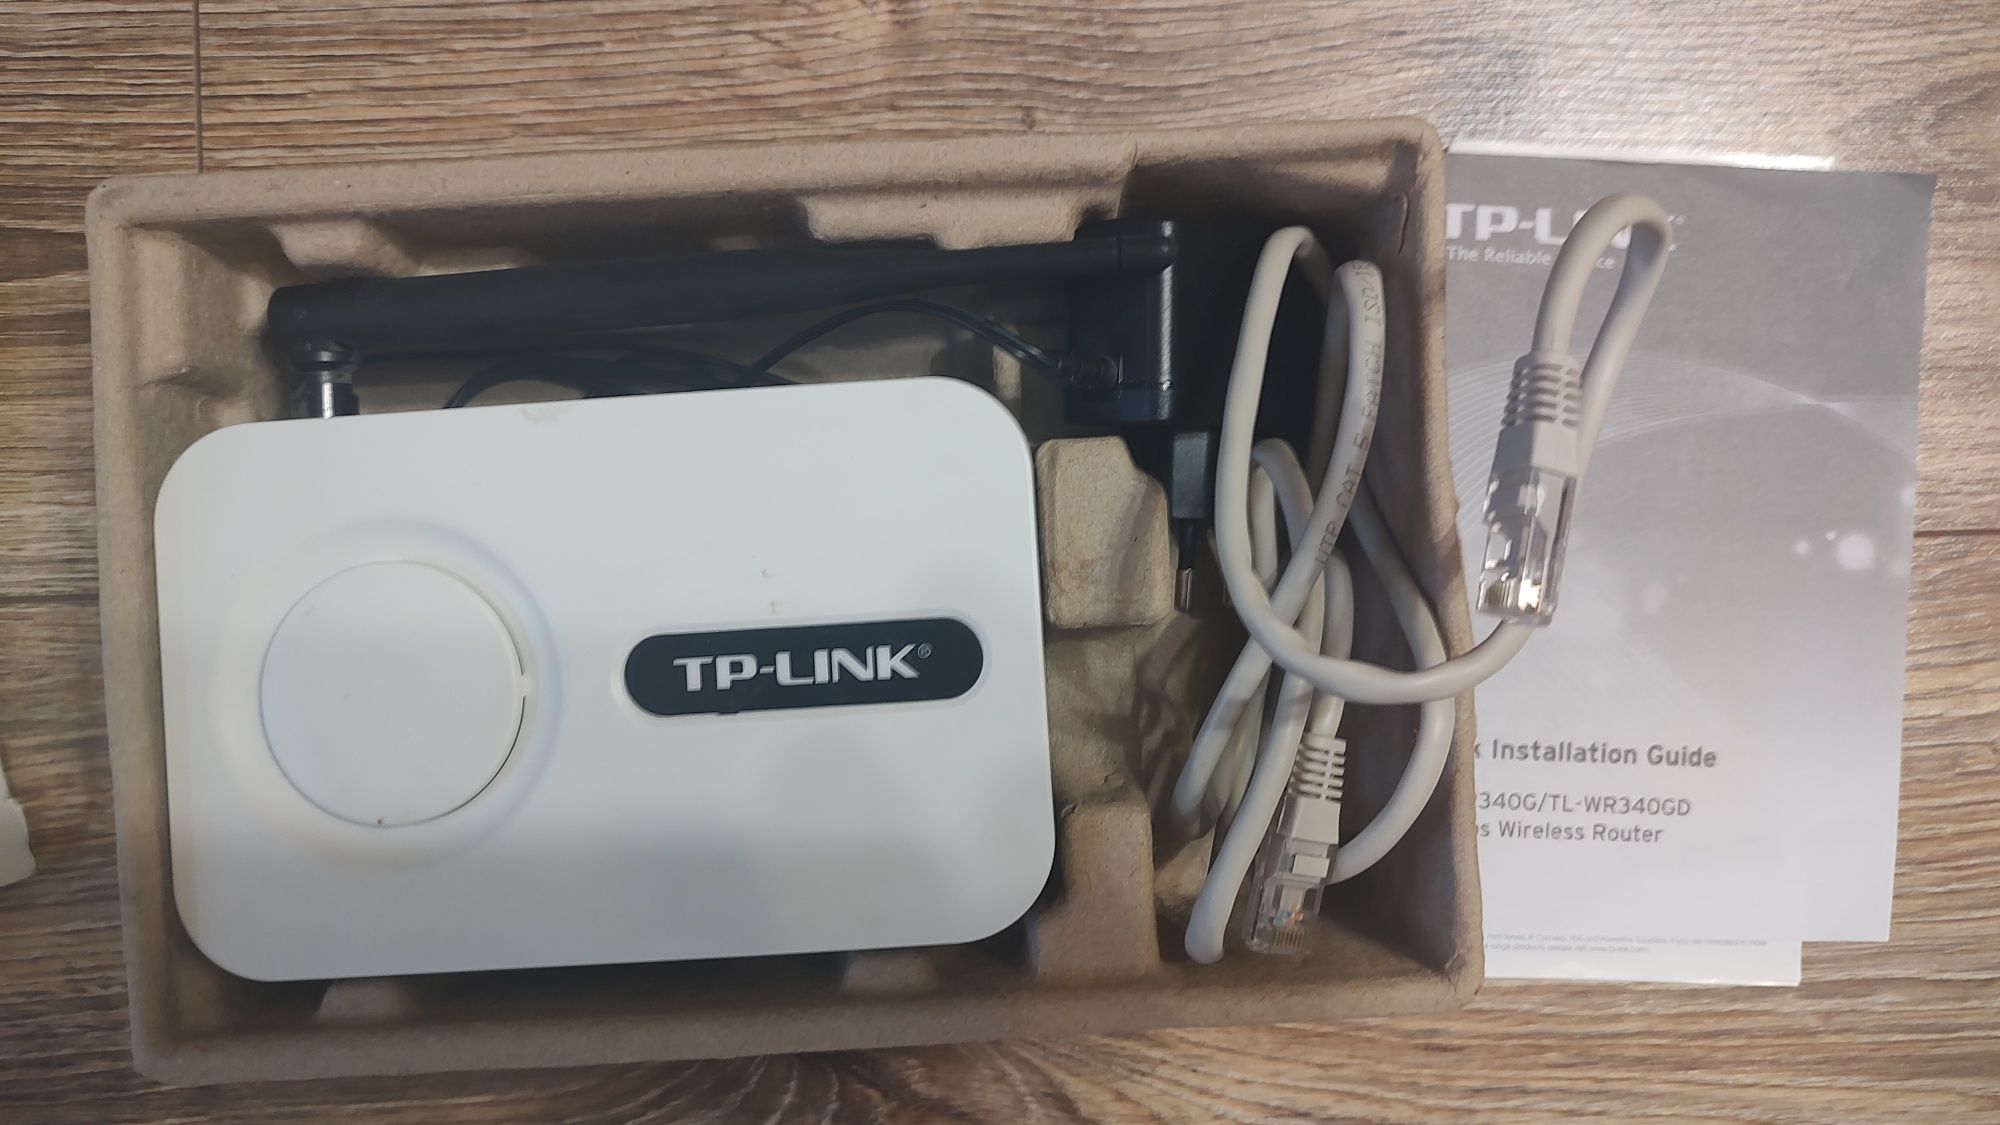 Sprzedam Router TP Llink